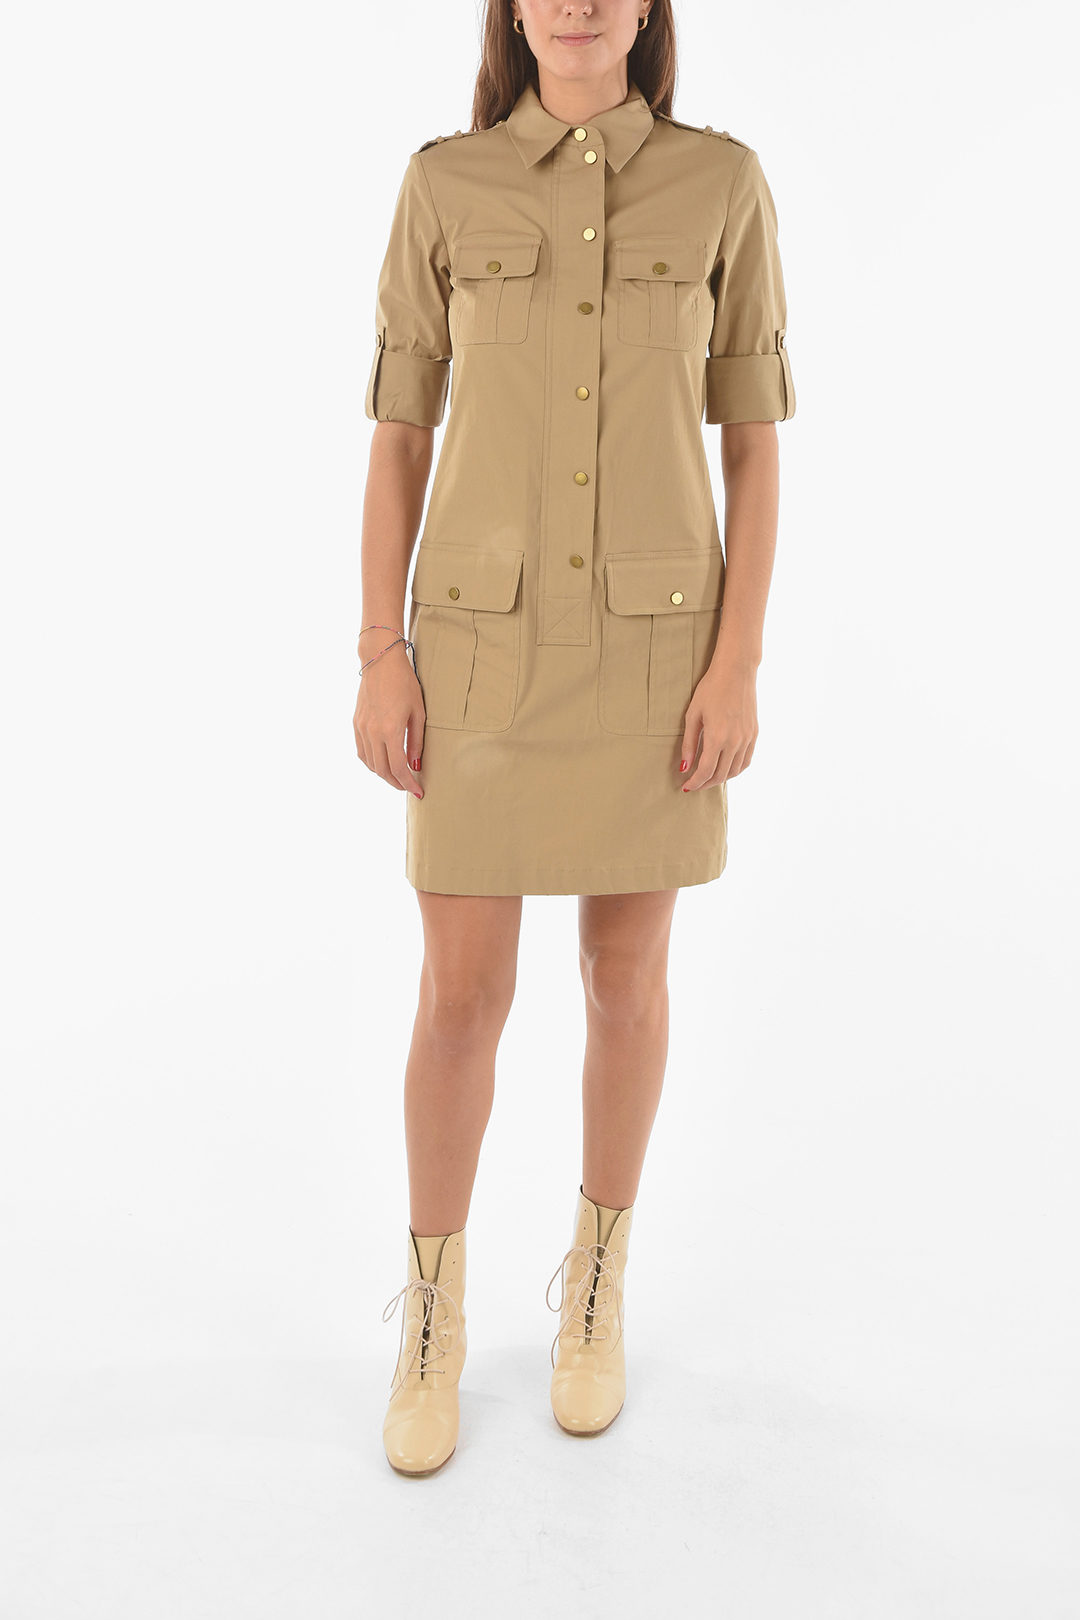 Michael Kors Snap Button Zipped Utility Shirt Dress women - Glamood Outlet